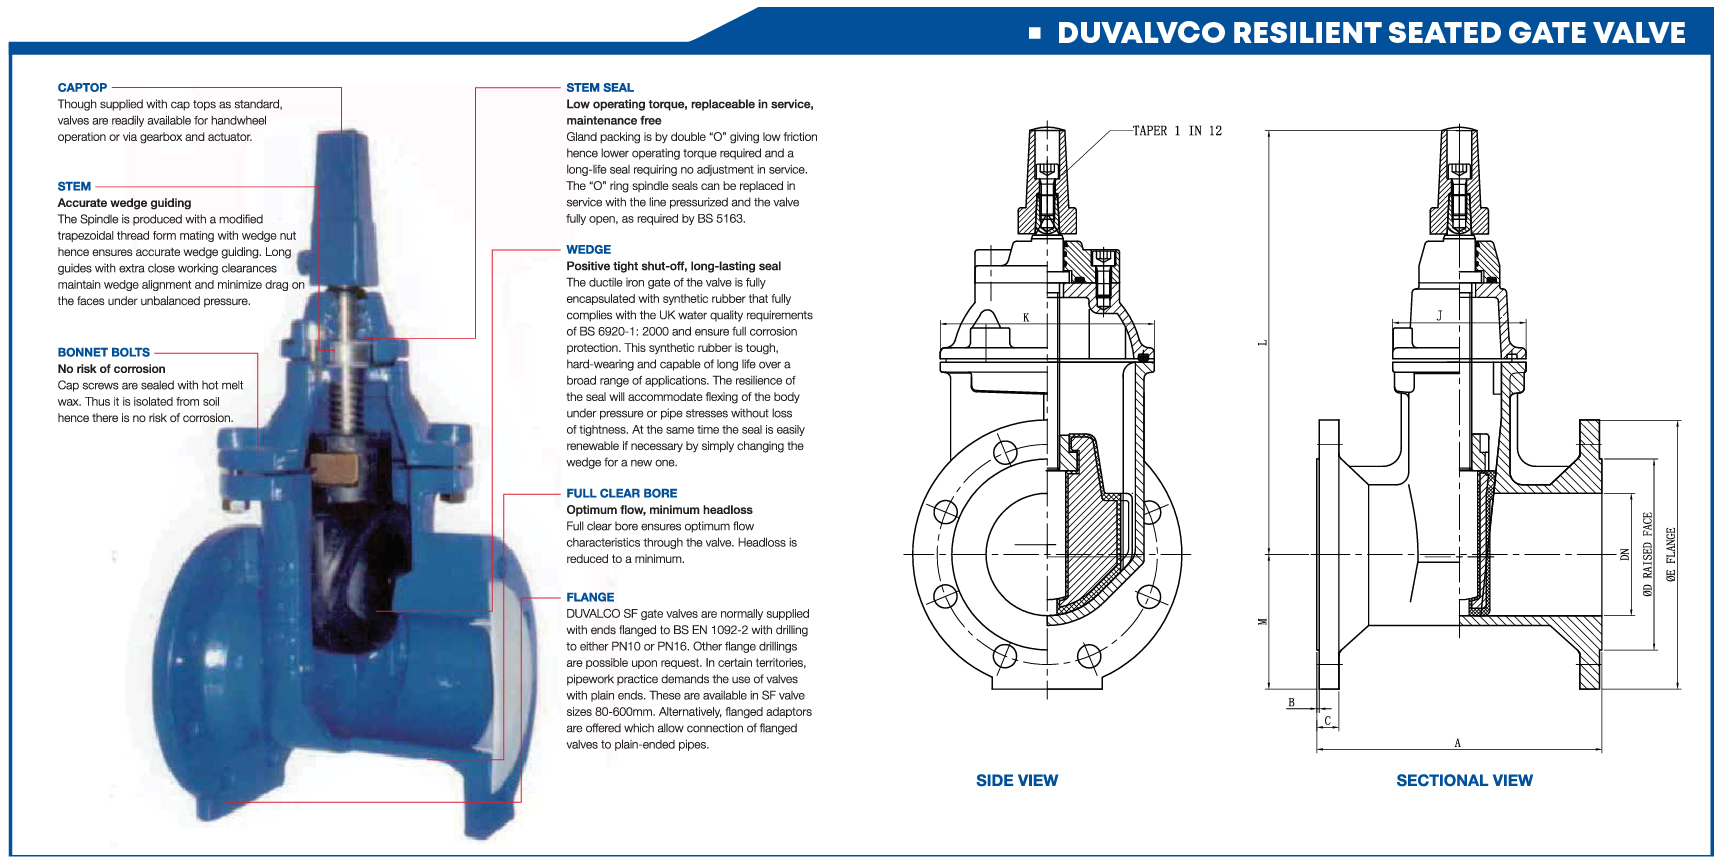 duvalco-gate-valve-malaysia